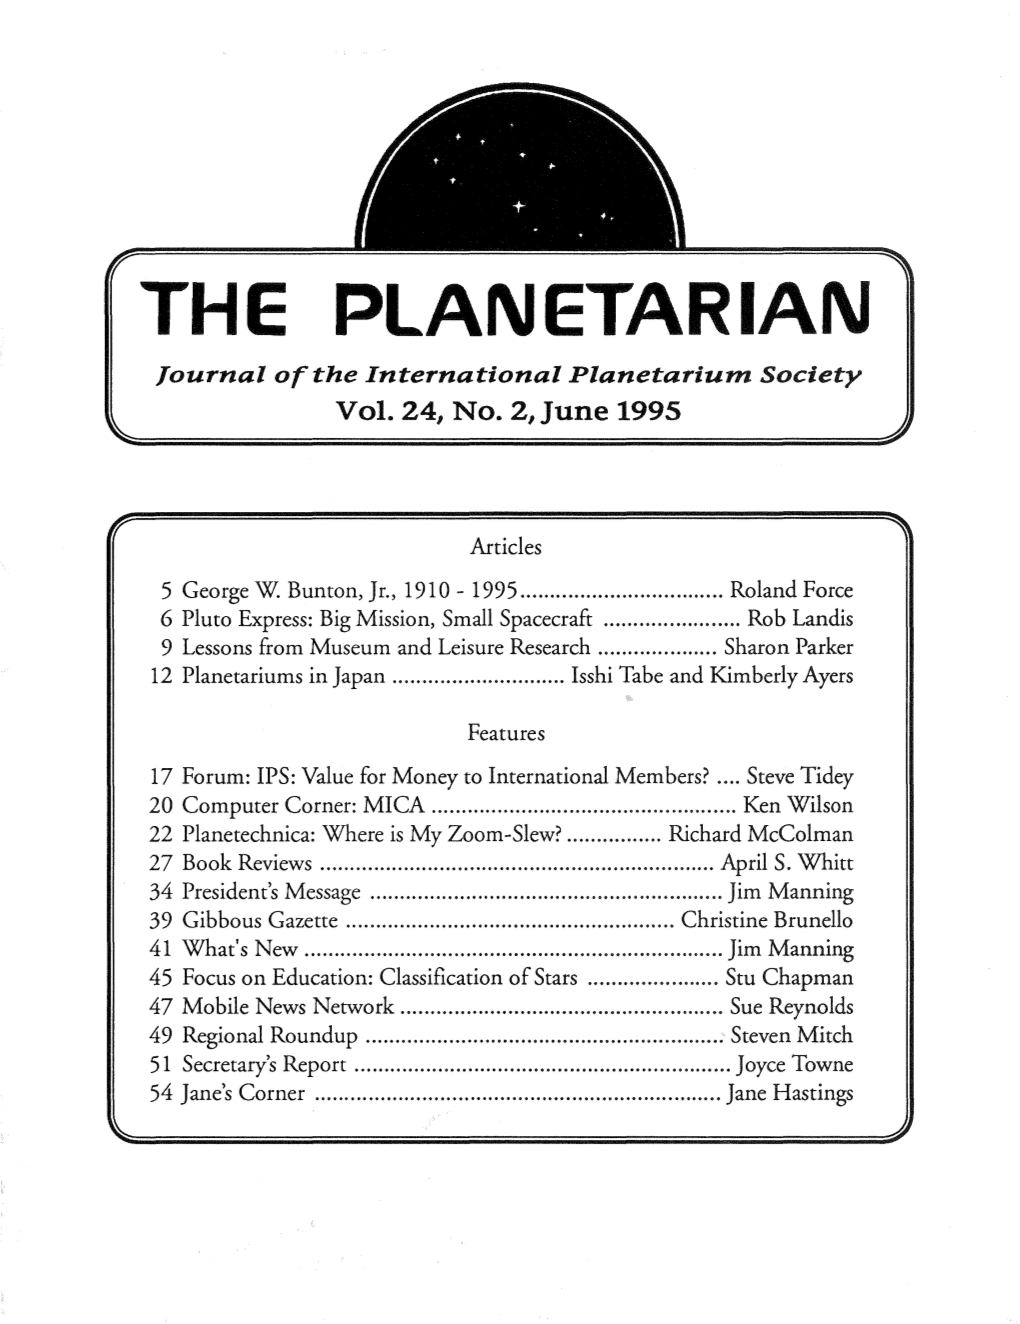 THE PLANETARIAN Journal of the International Planetarium Society Vol